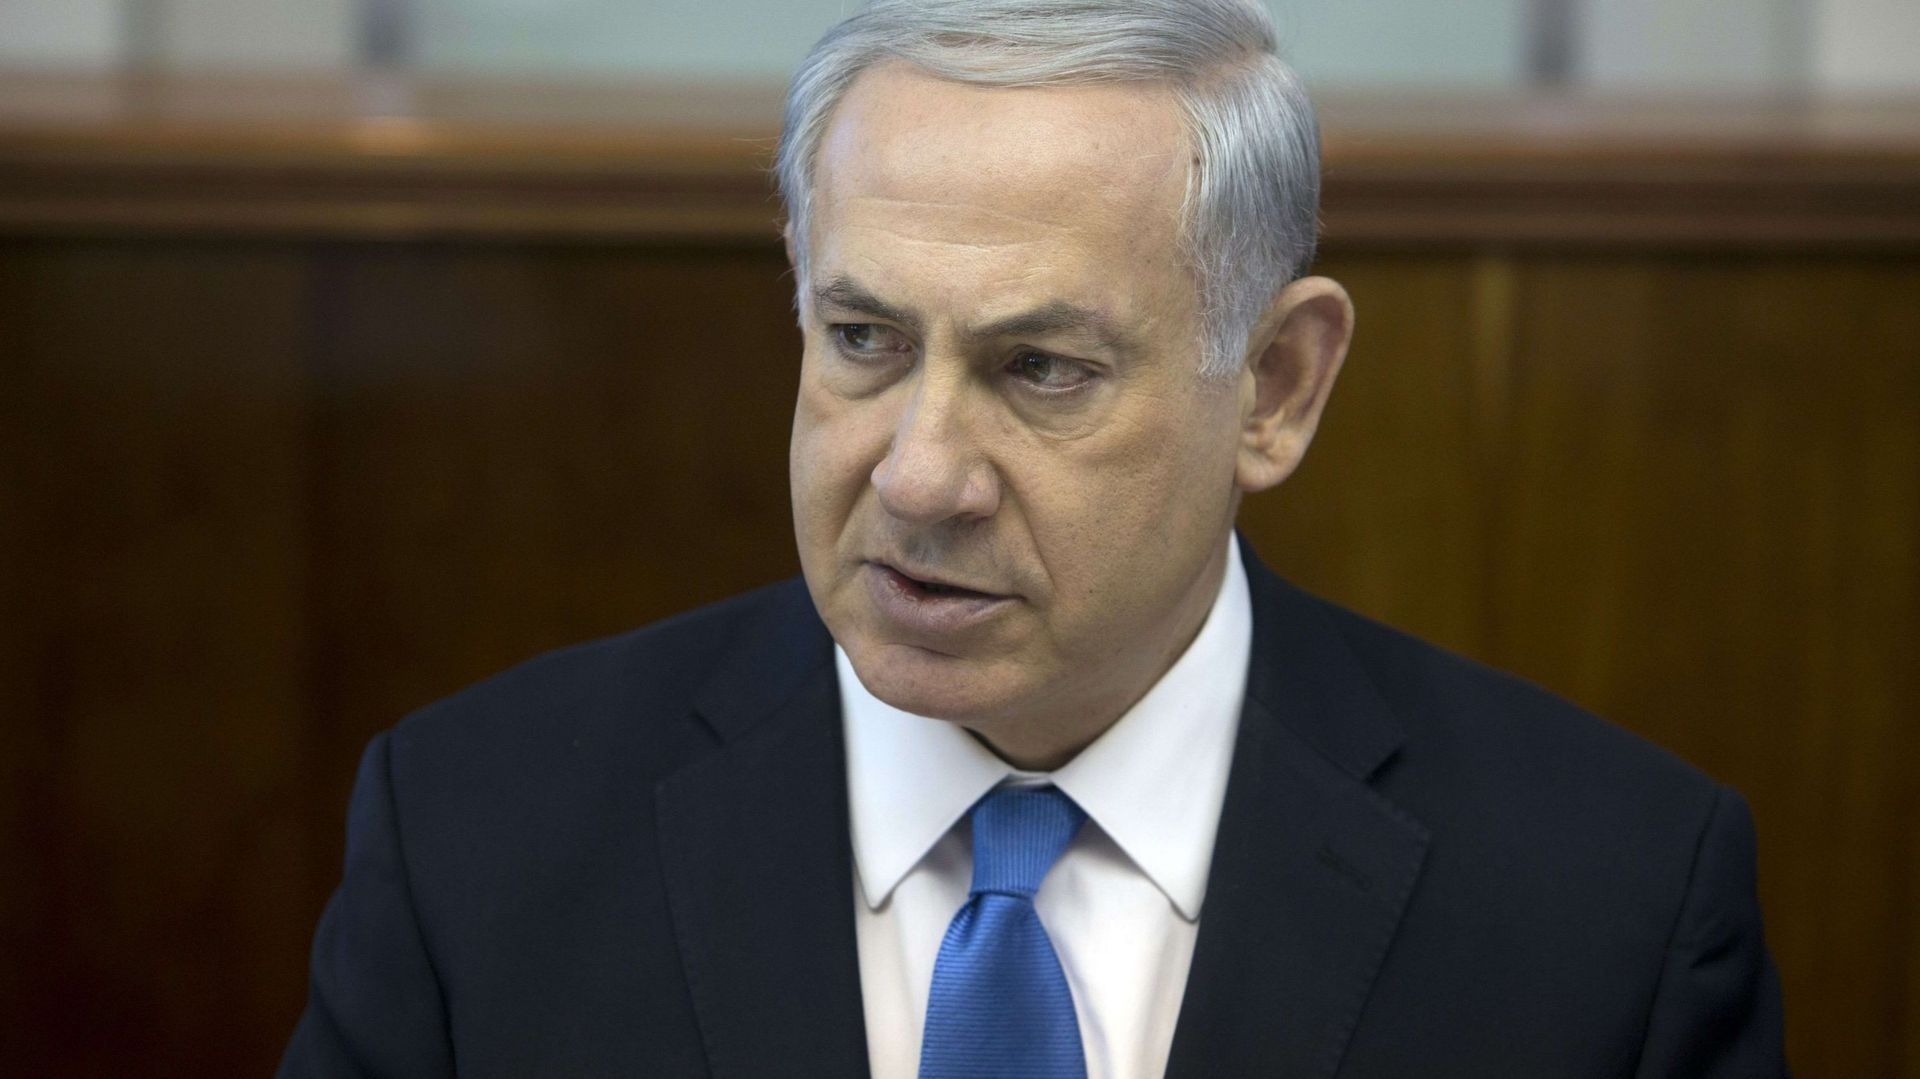 commemoration-de-la-shoah-netanyahu-avertit-contre-un-iran-nucleaire